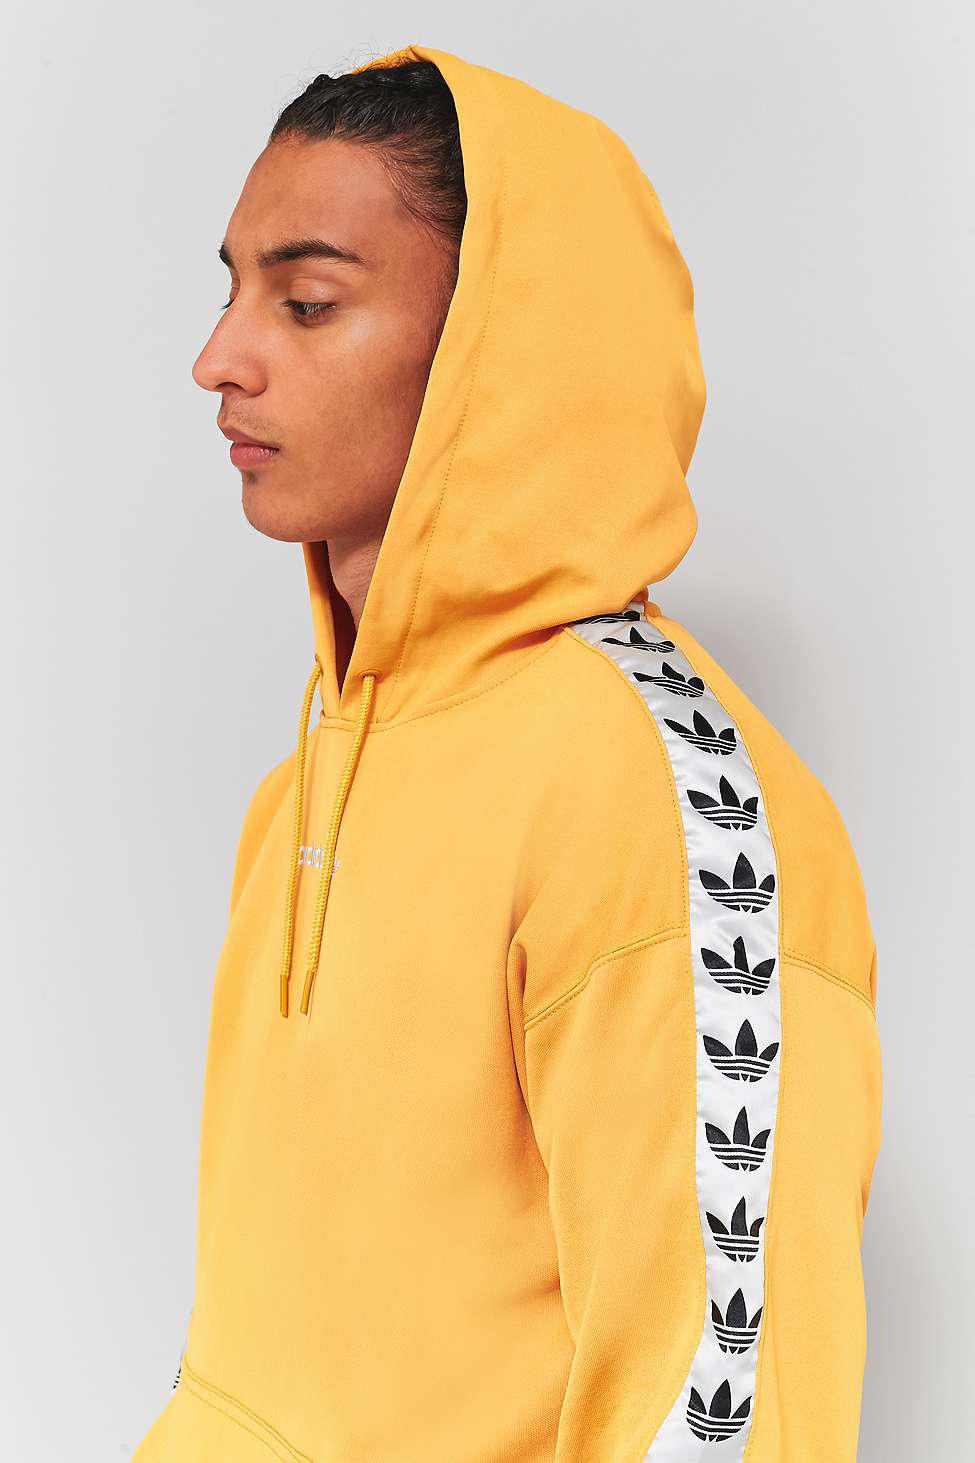 adidas yellow tnt tape hoodie